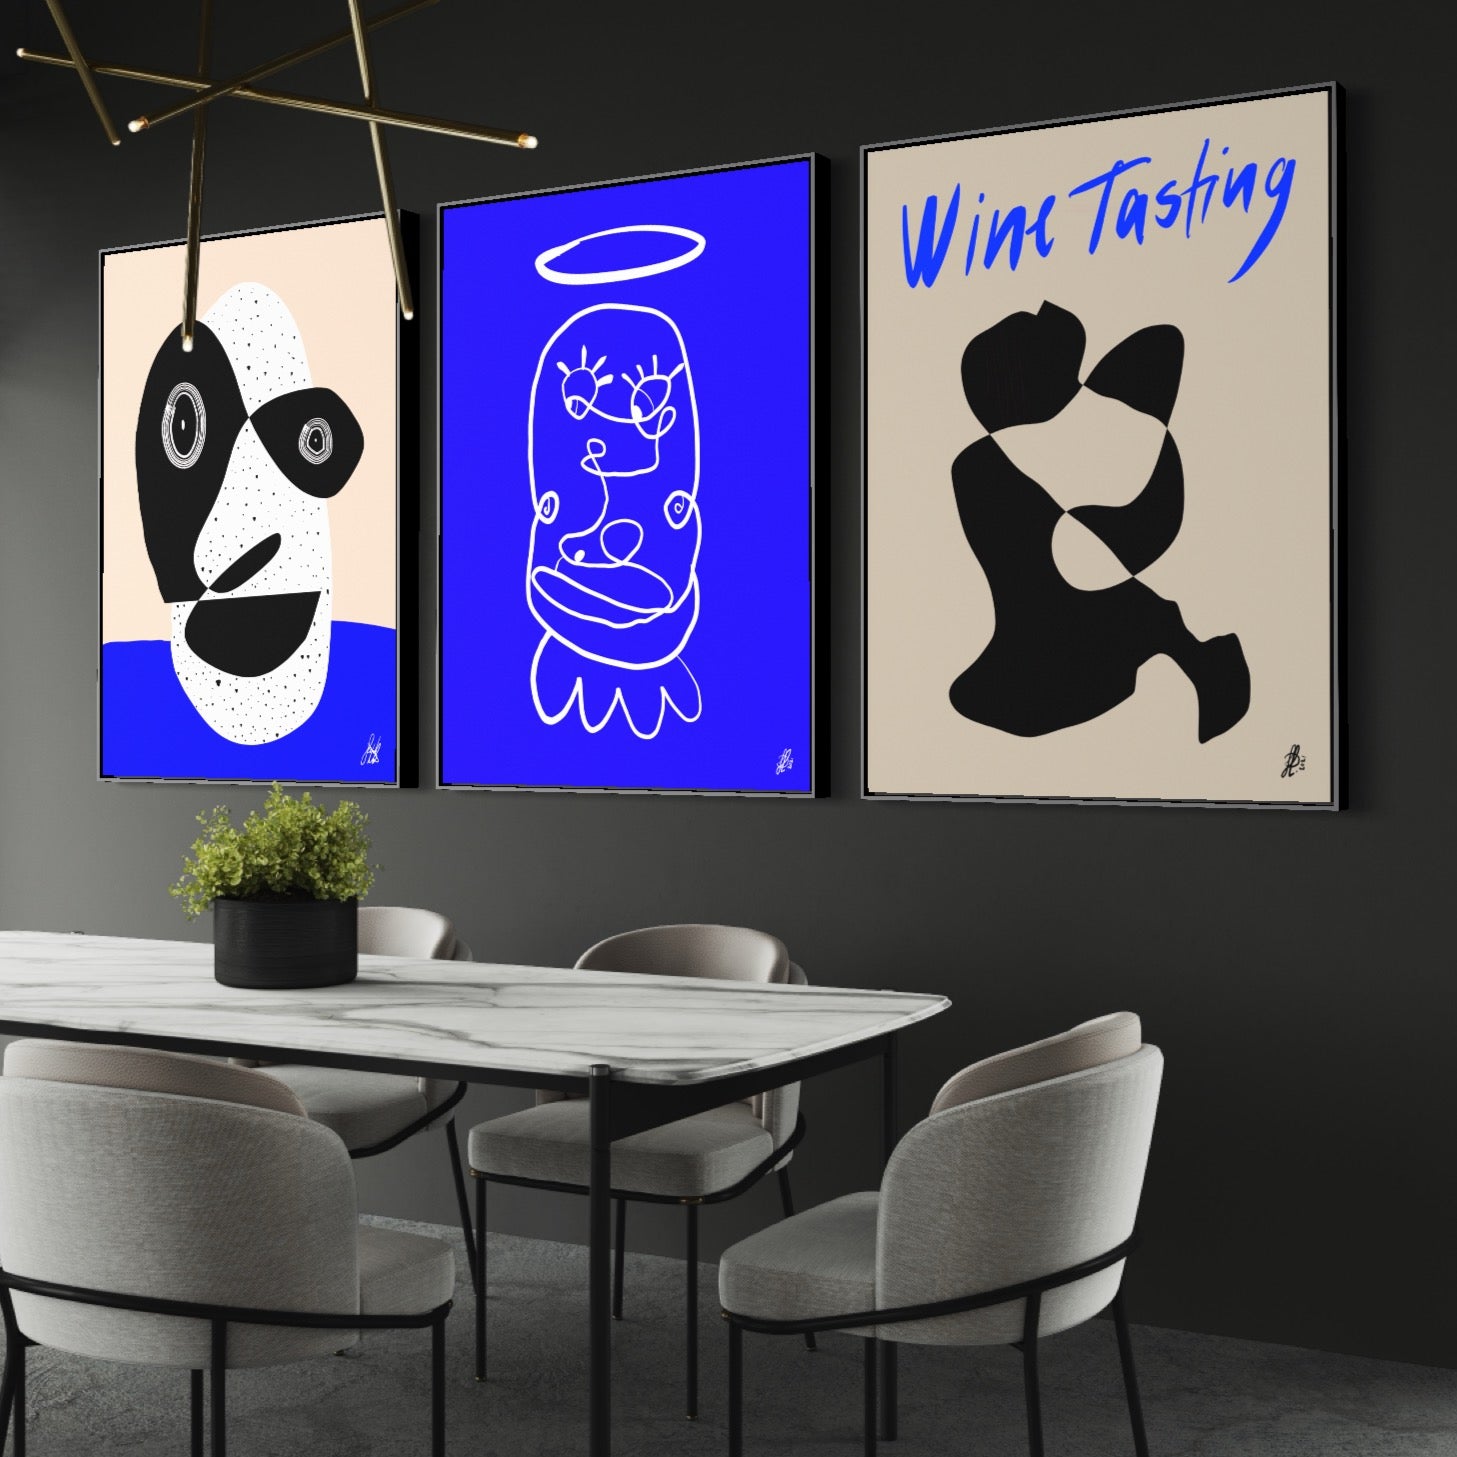 Art Wall 10 (3 Posters) - Allan, Peter, Wine Tasting #1